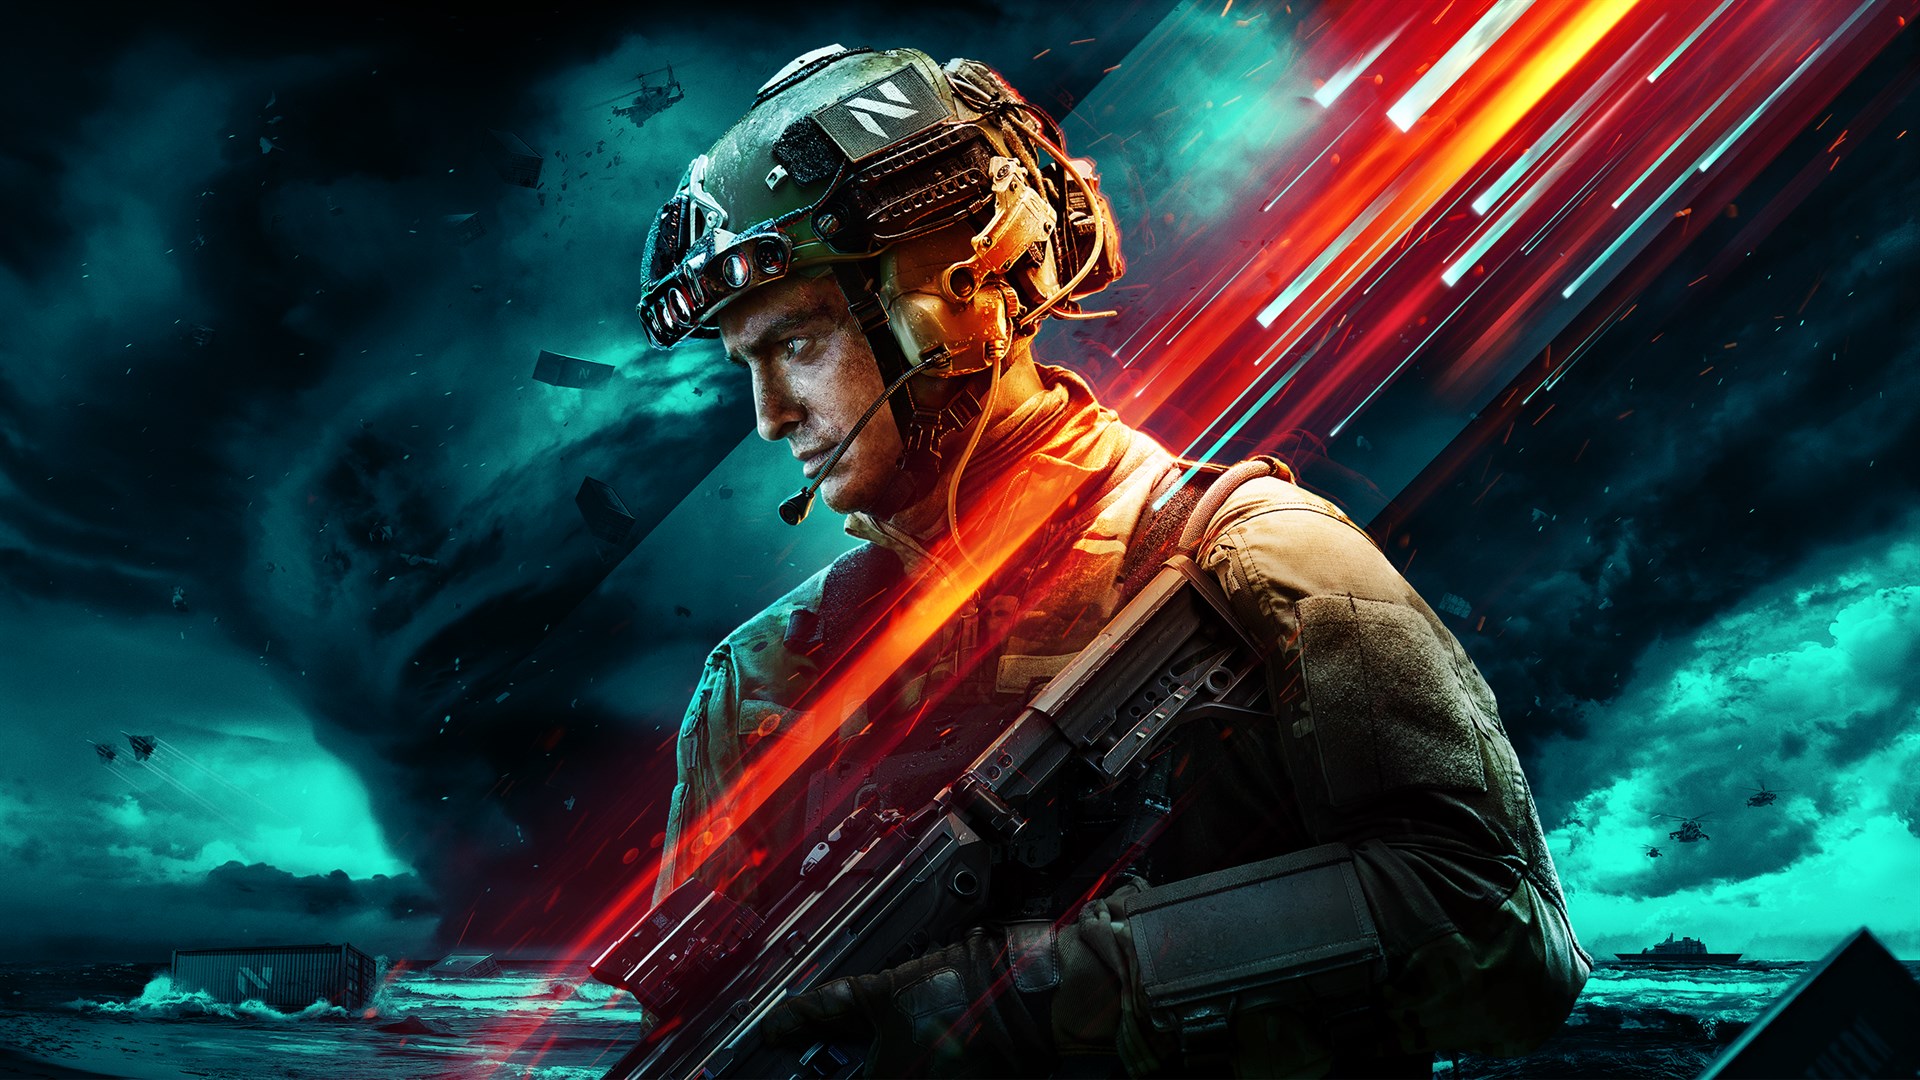 Battlefield™ 2042 Year 1 Pass Seasonal Pack Xbox One & Xbox Series X|S